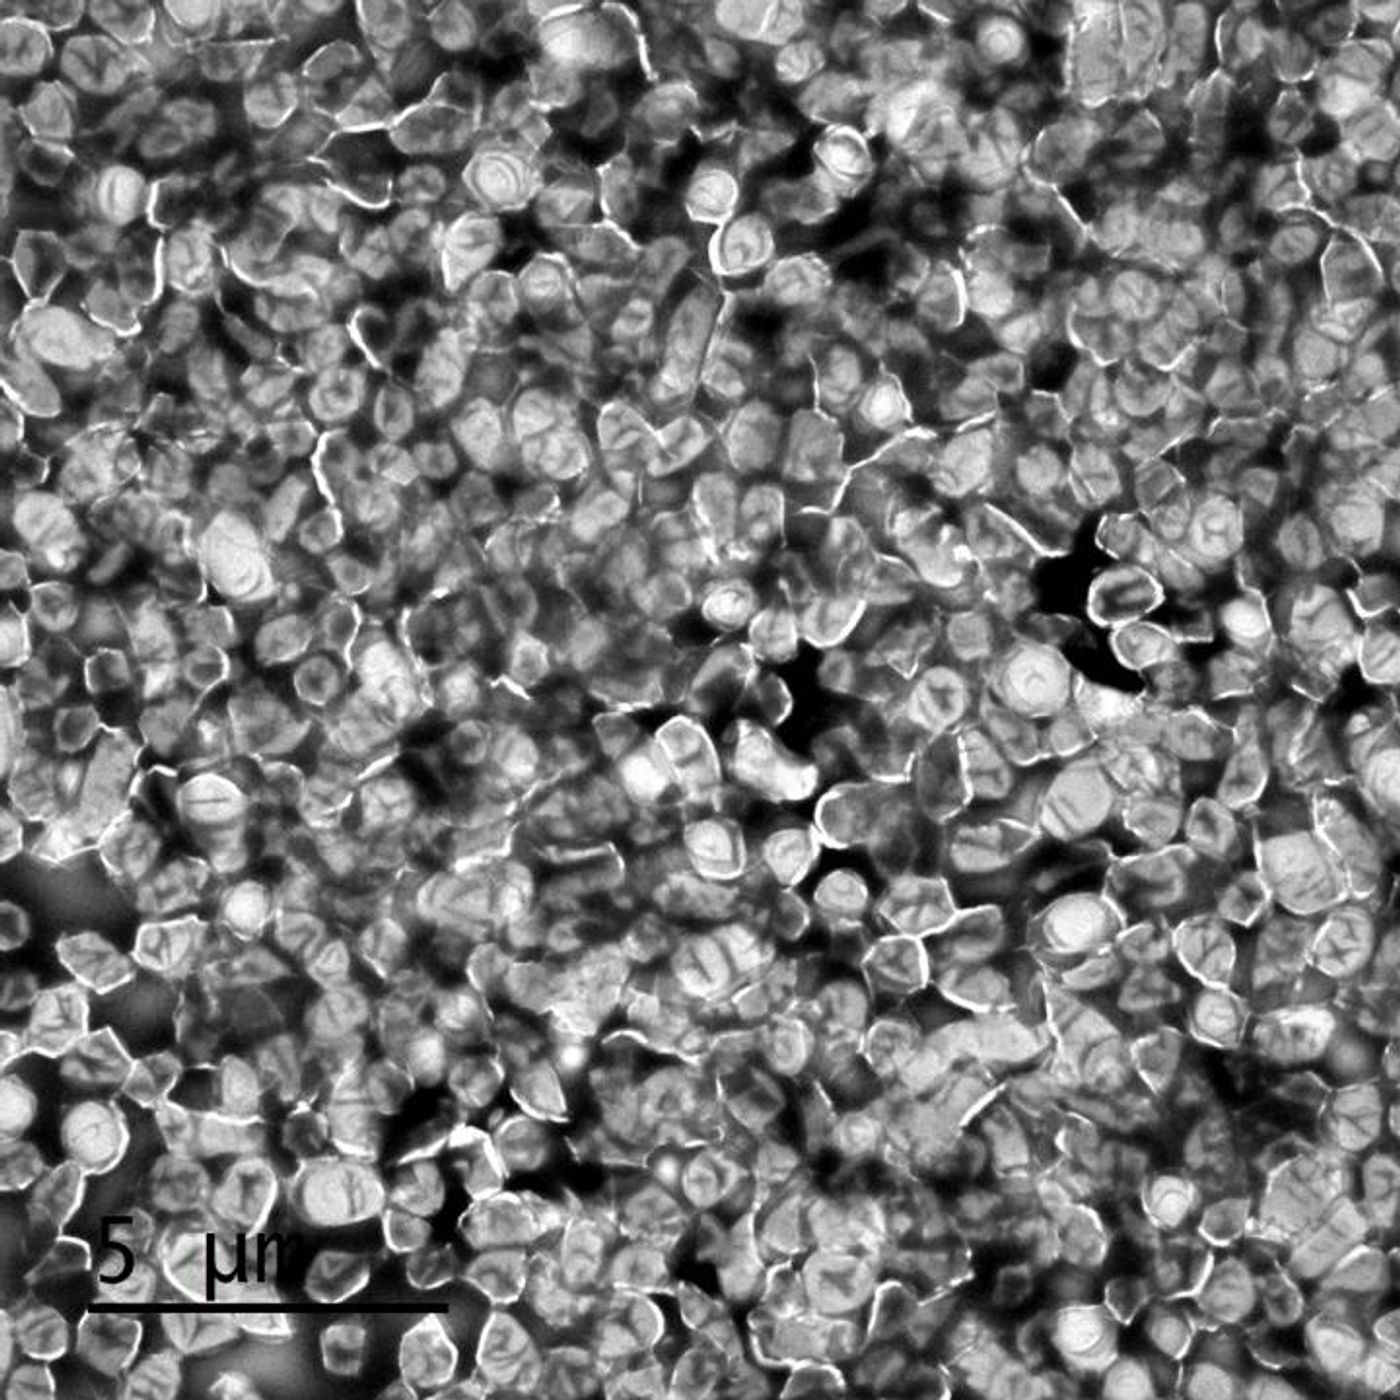  negative stain electron micrograph of a dense culture of Francisella bacteria. / Credit: Alexandra Walls and Aria Eshraghi